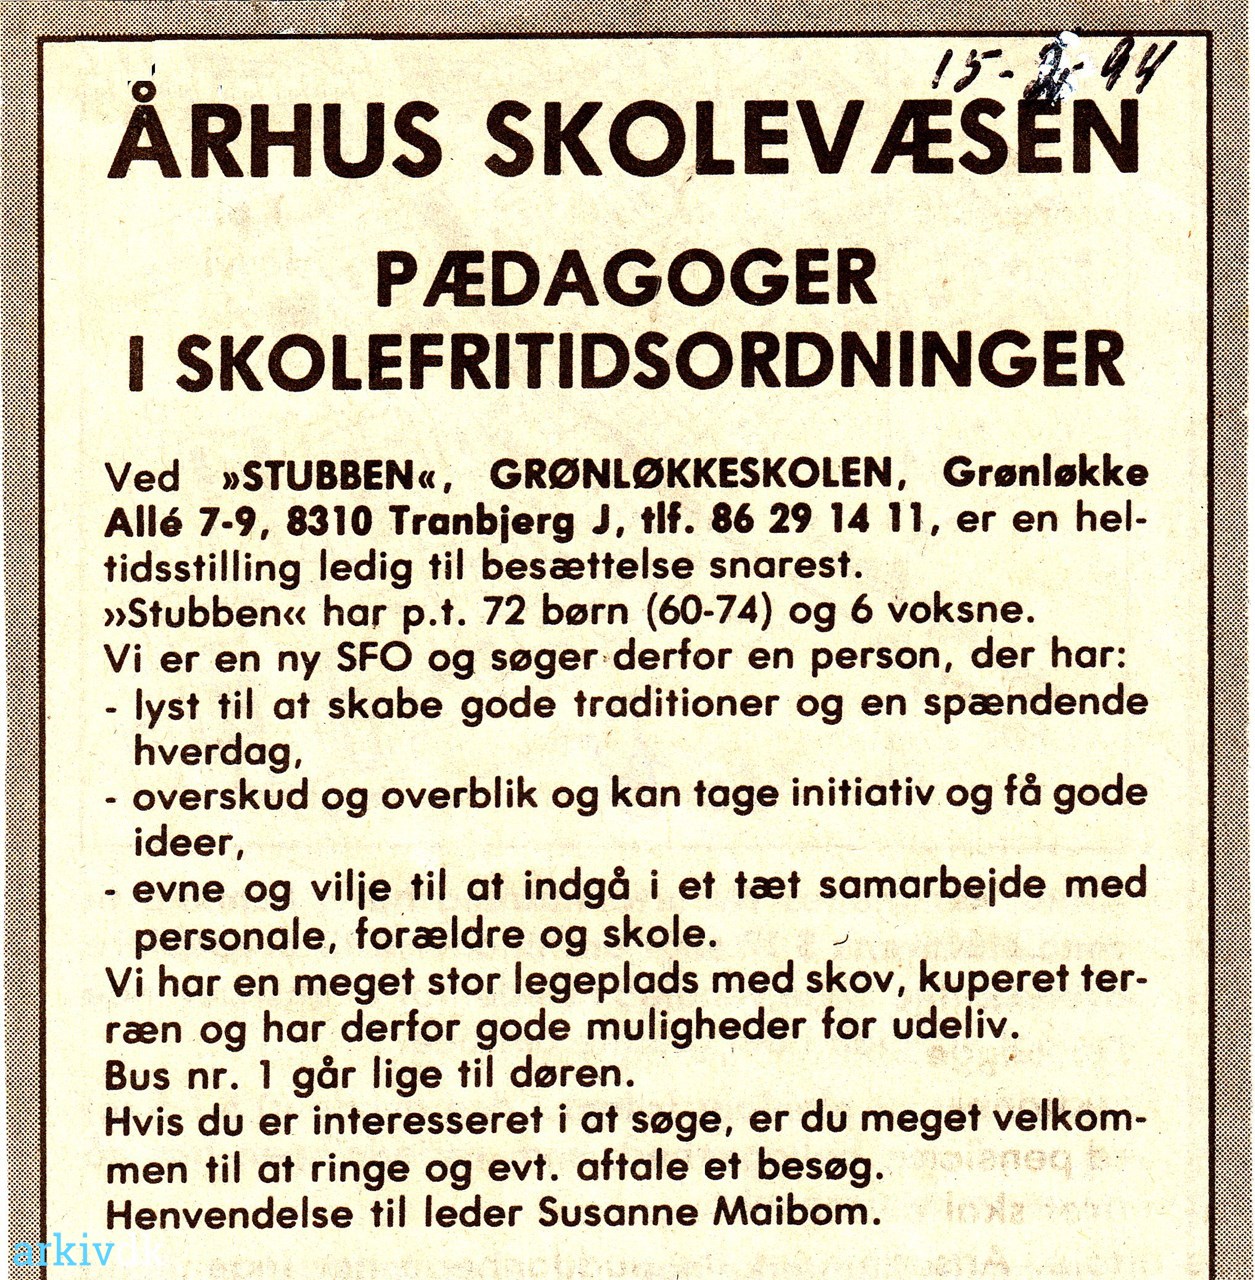 arkiv.dk ÅRHUS PÆDA- GOGER I SKOLEFRITIDS- ORDNINGER. 1994.